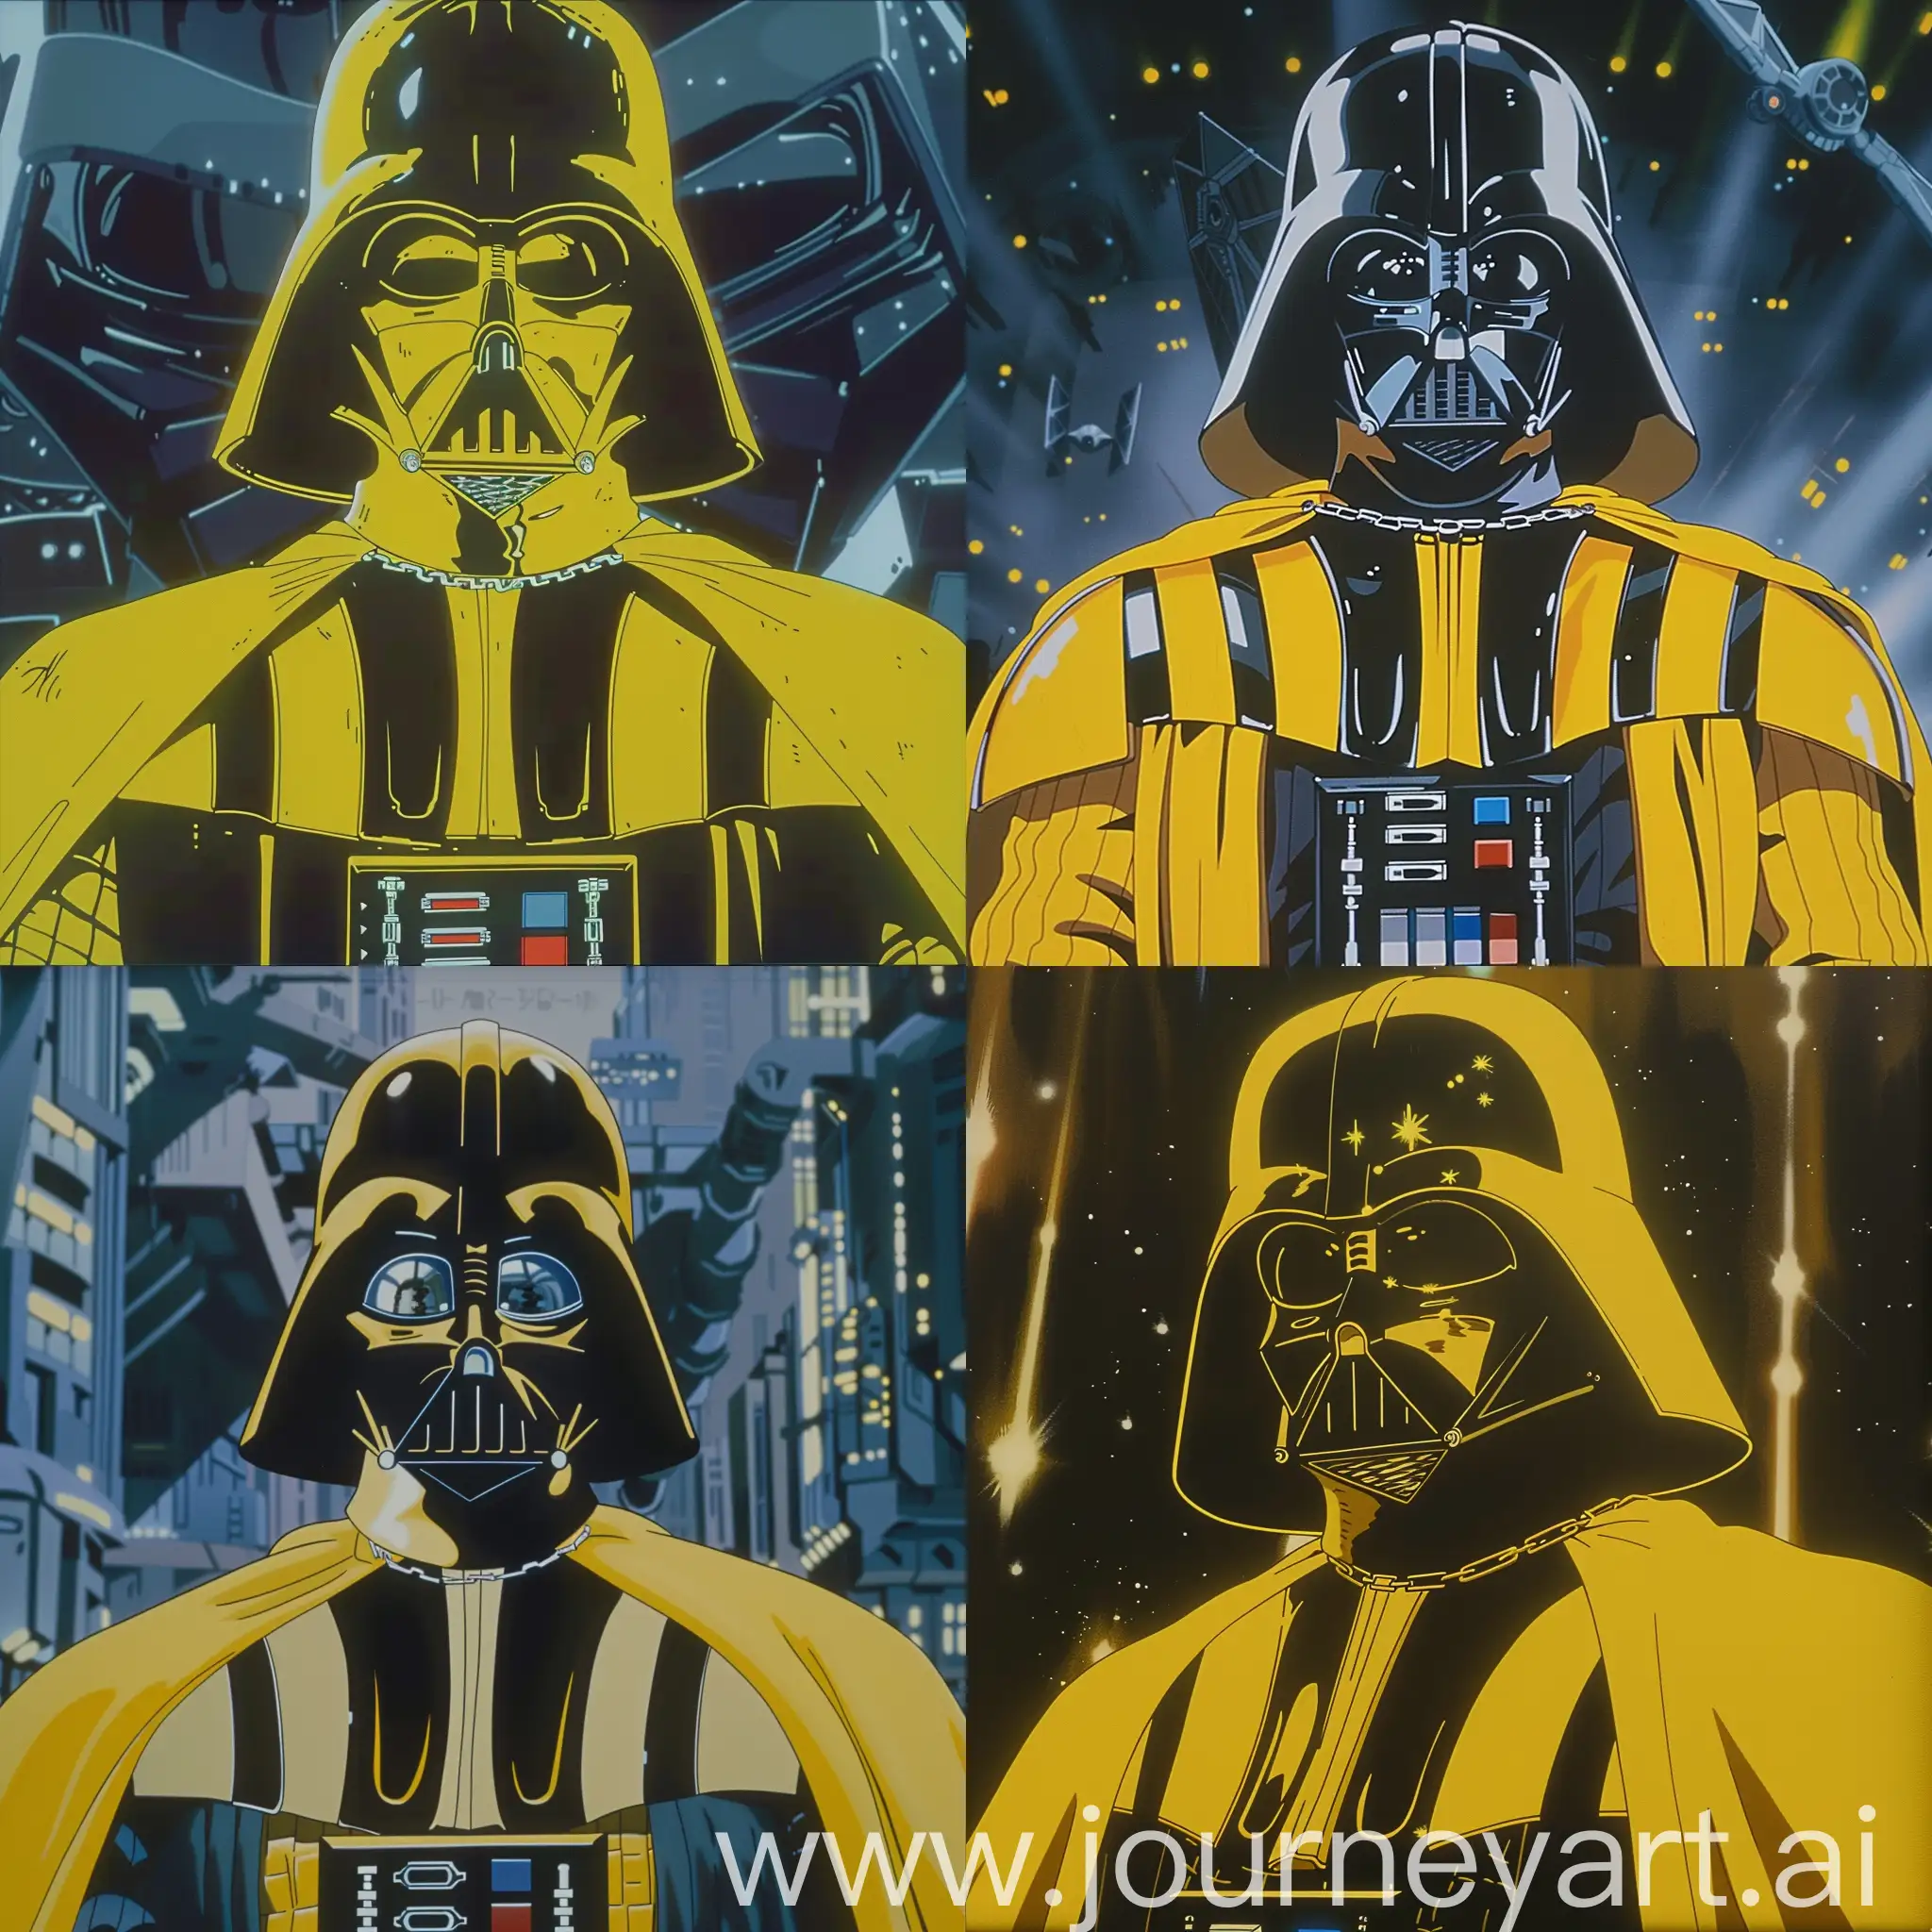 Darth-Vader-Anime-Portrait-Iconic-Villain-in-Yellow-Costume